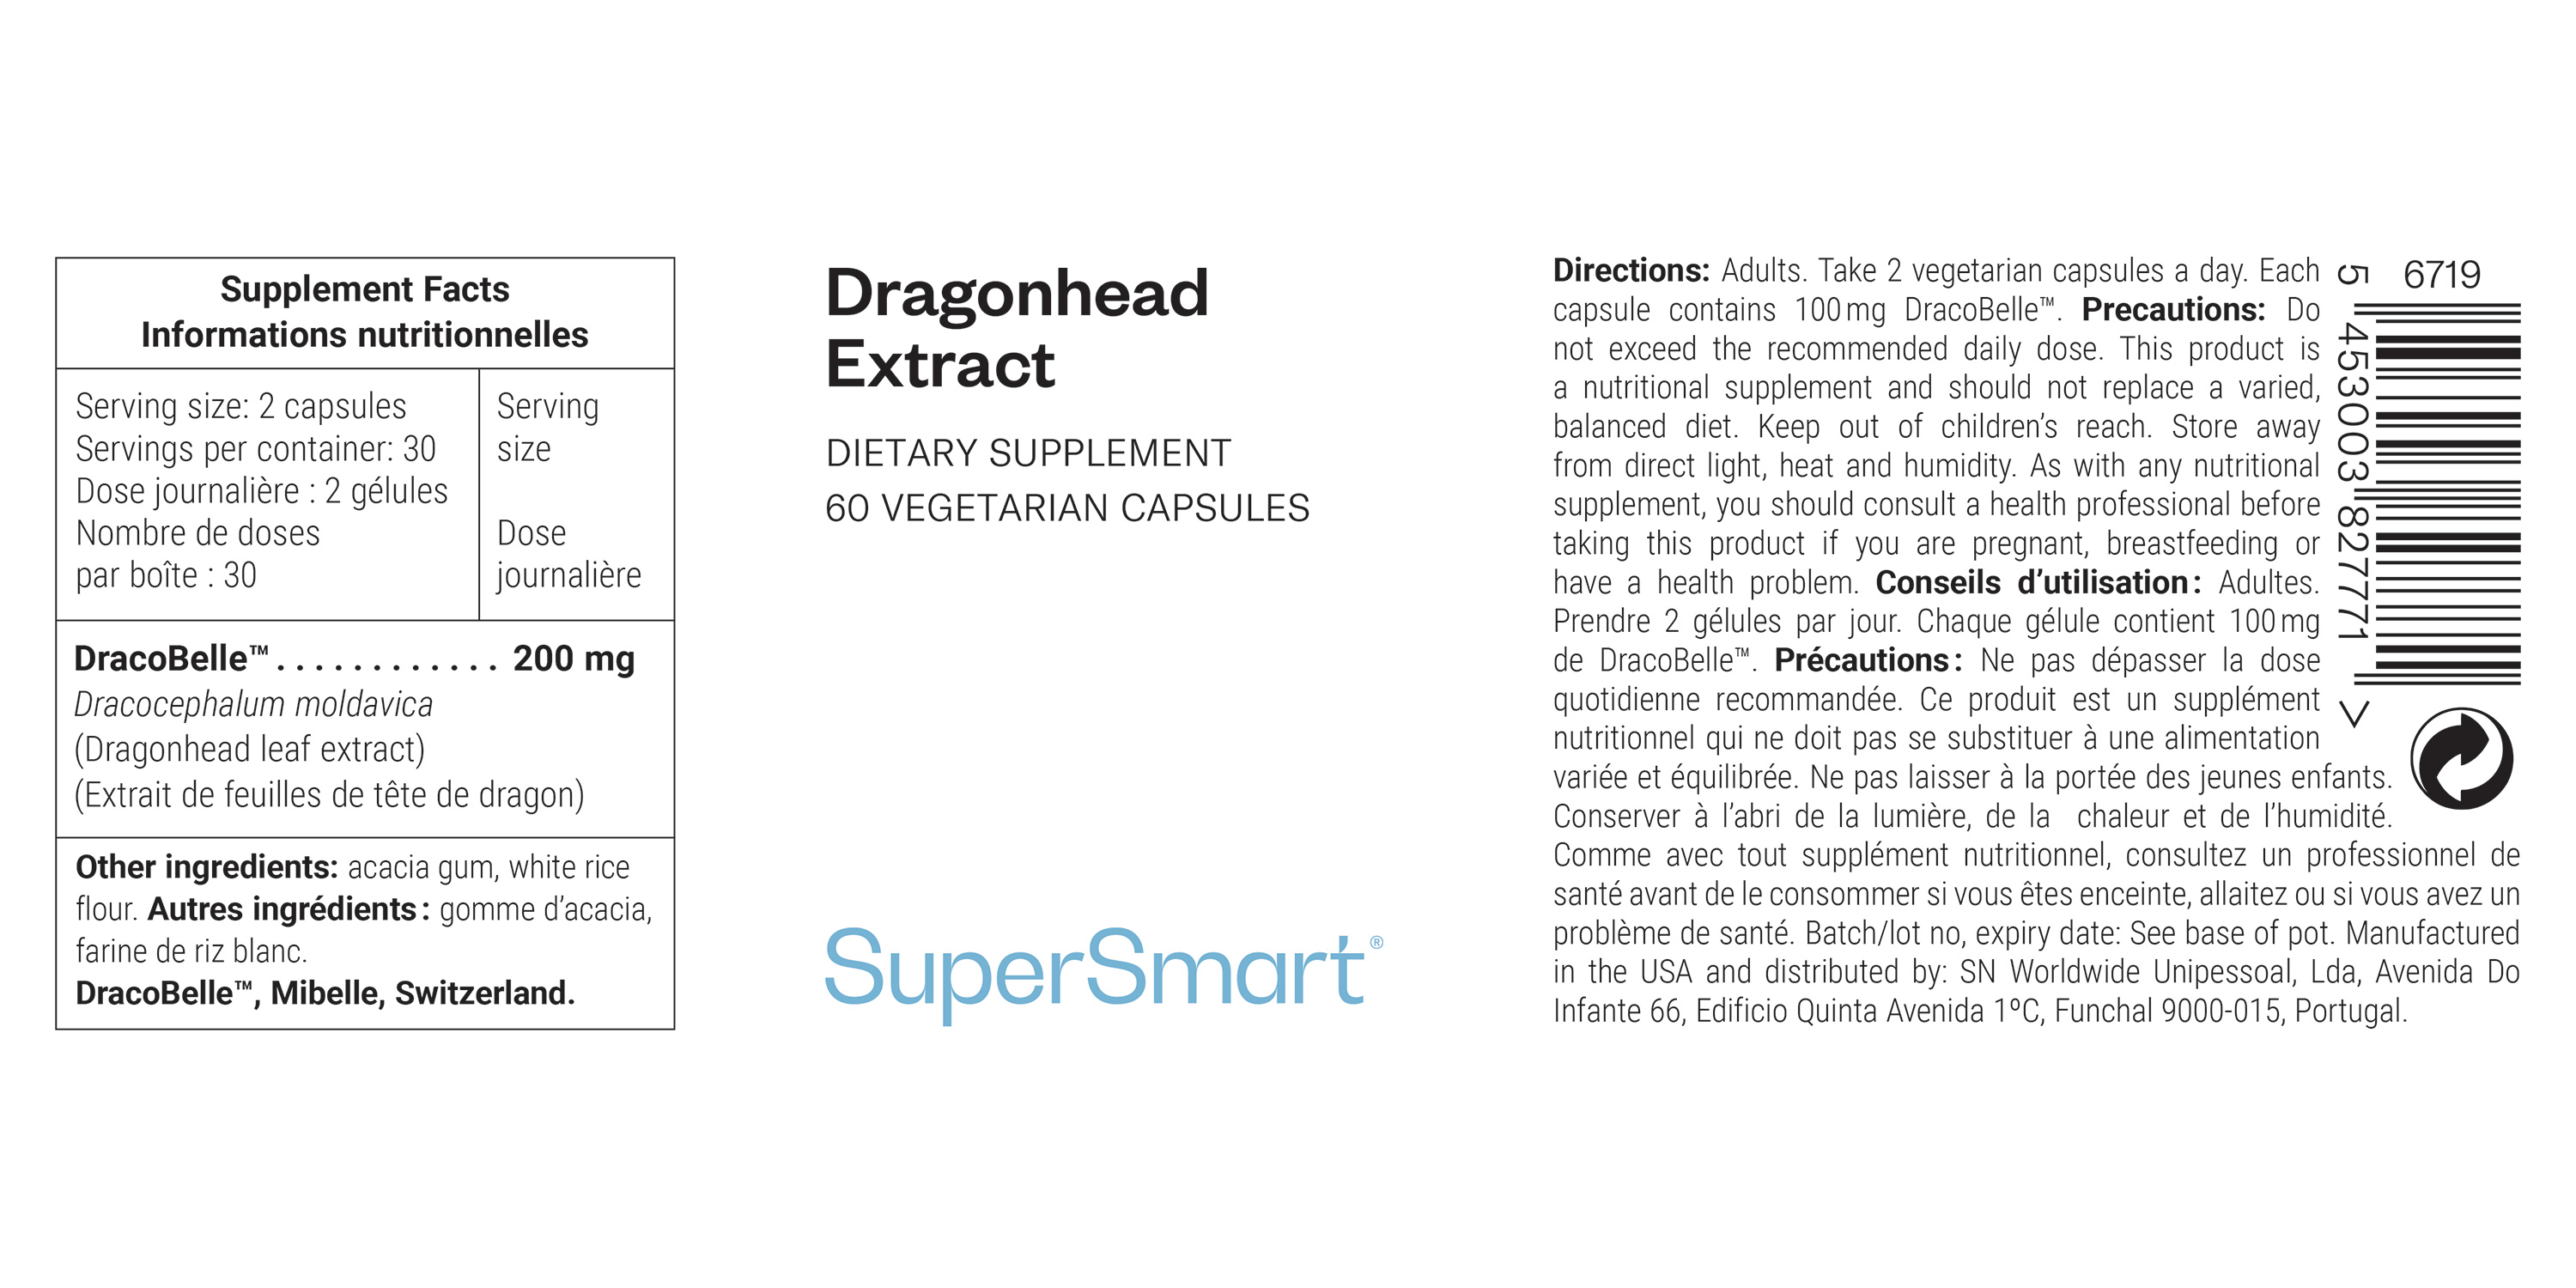 Dragonhead Extract